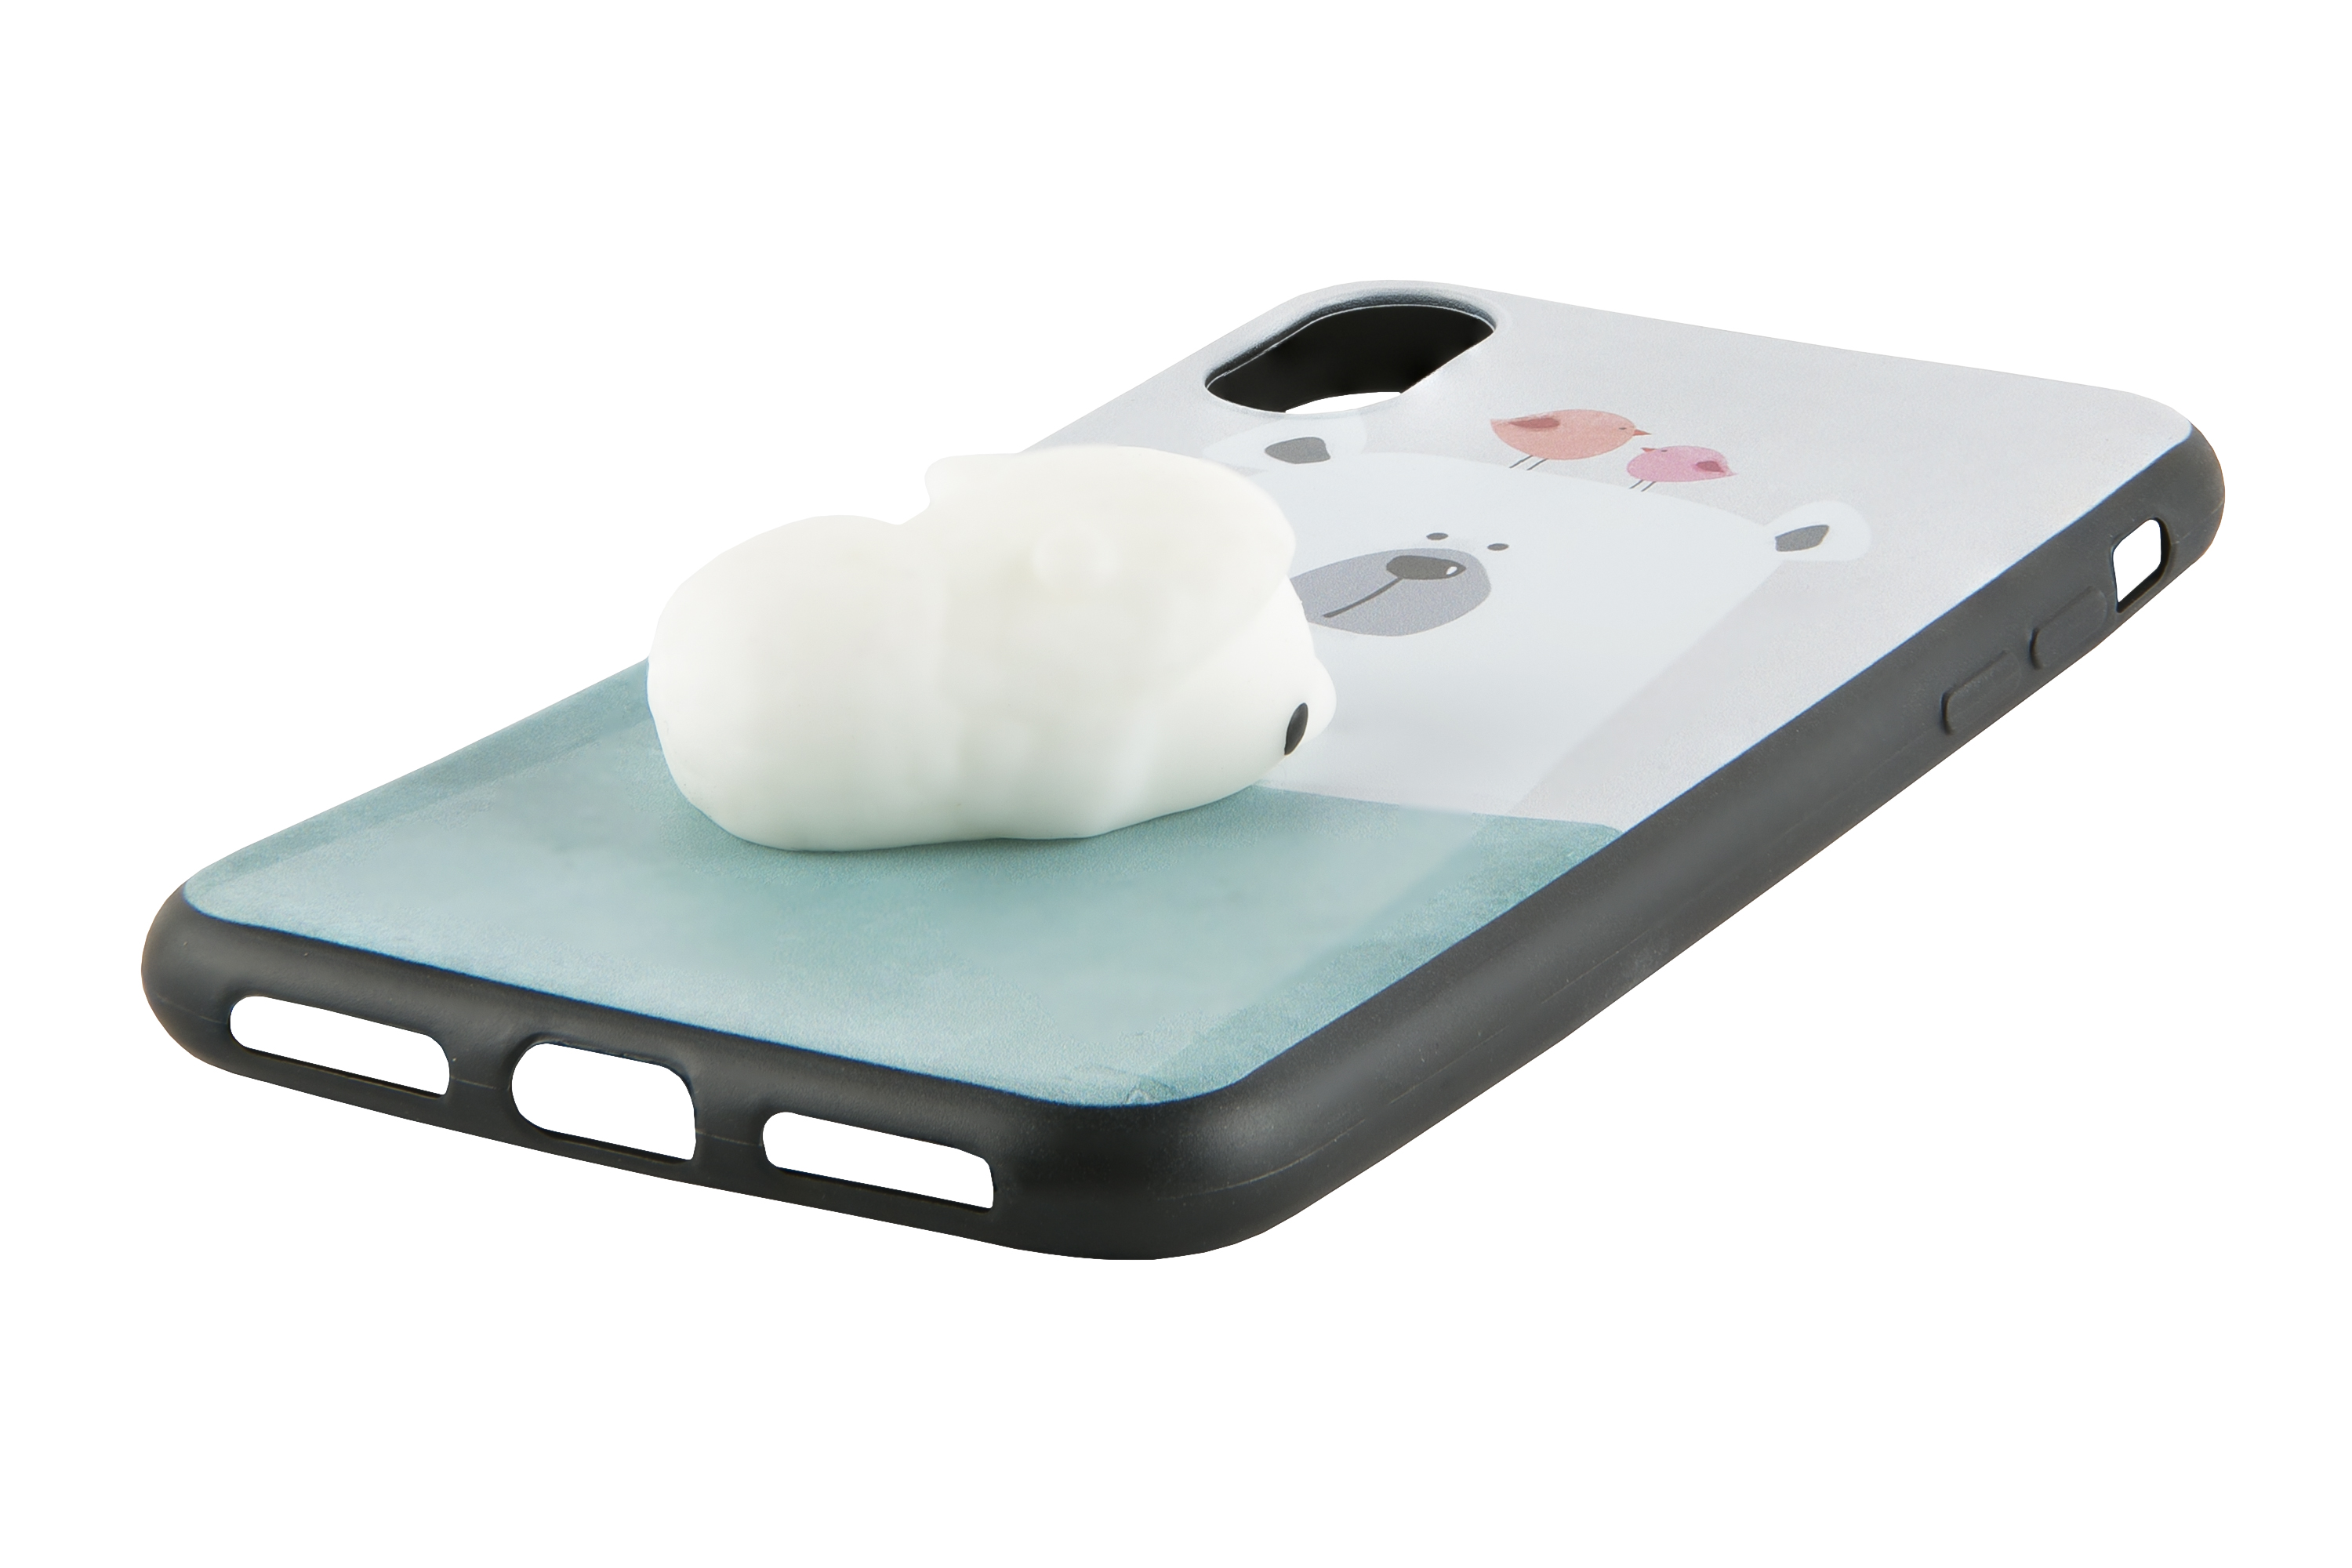 Накладка силикон iBox Crystal Jelly Case для Apple iPhone X, дизайн №7